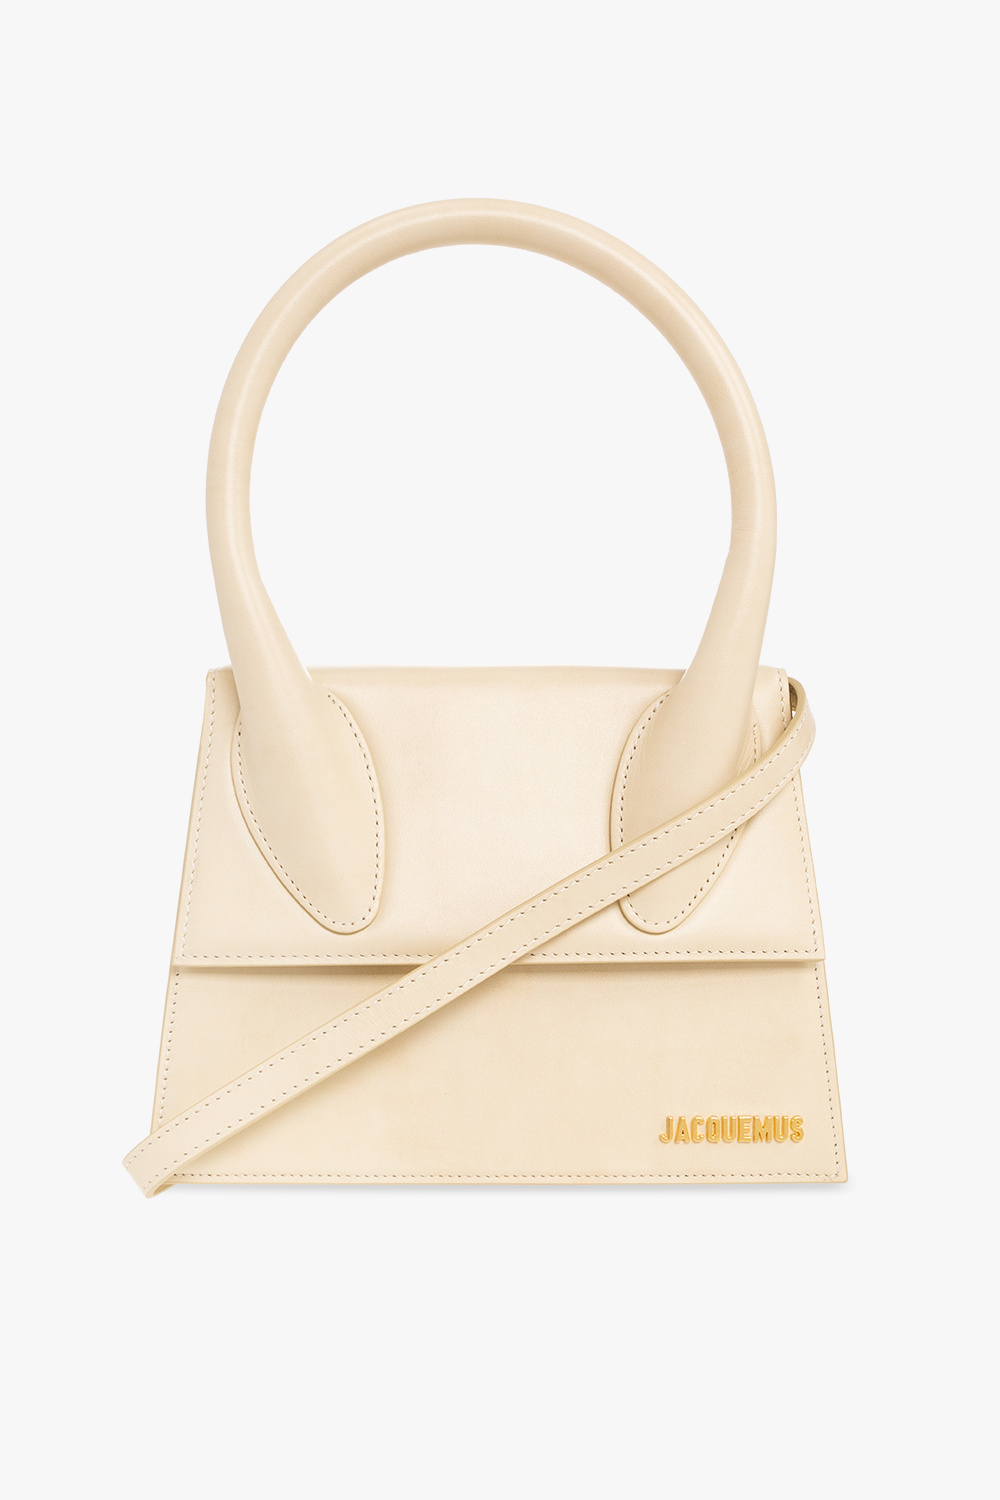 Jacquemus ‘Le Grand Chiquito’ shoulder bag